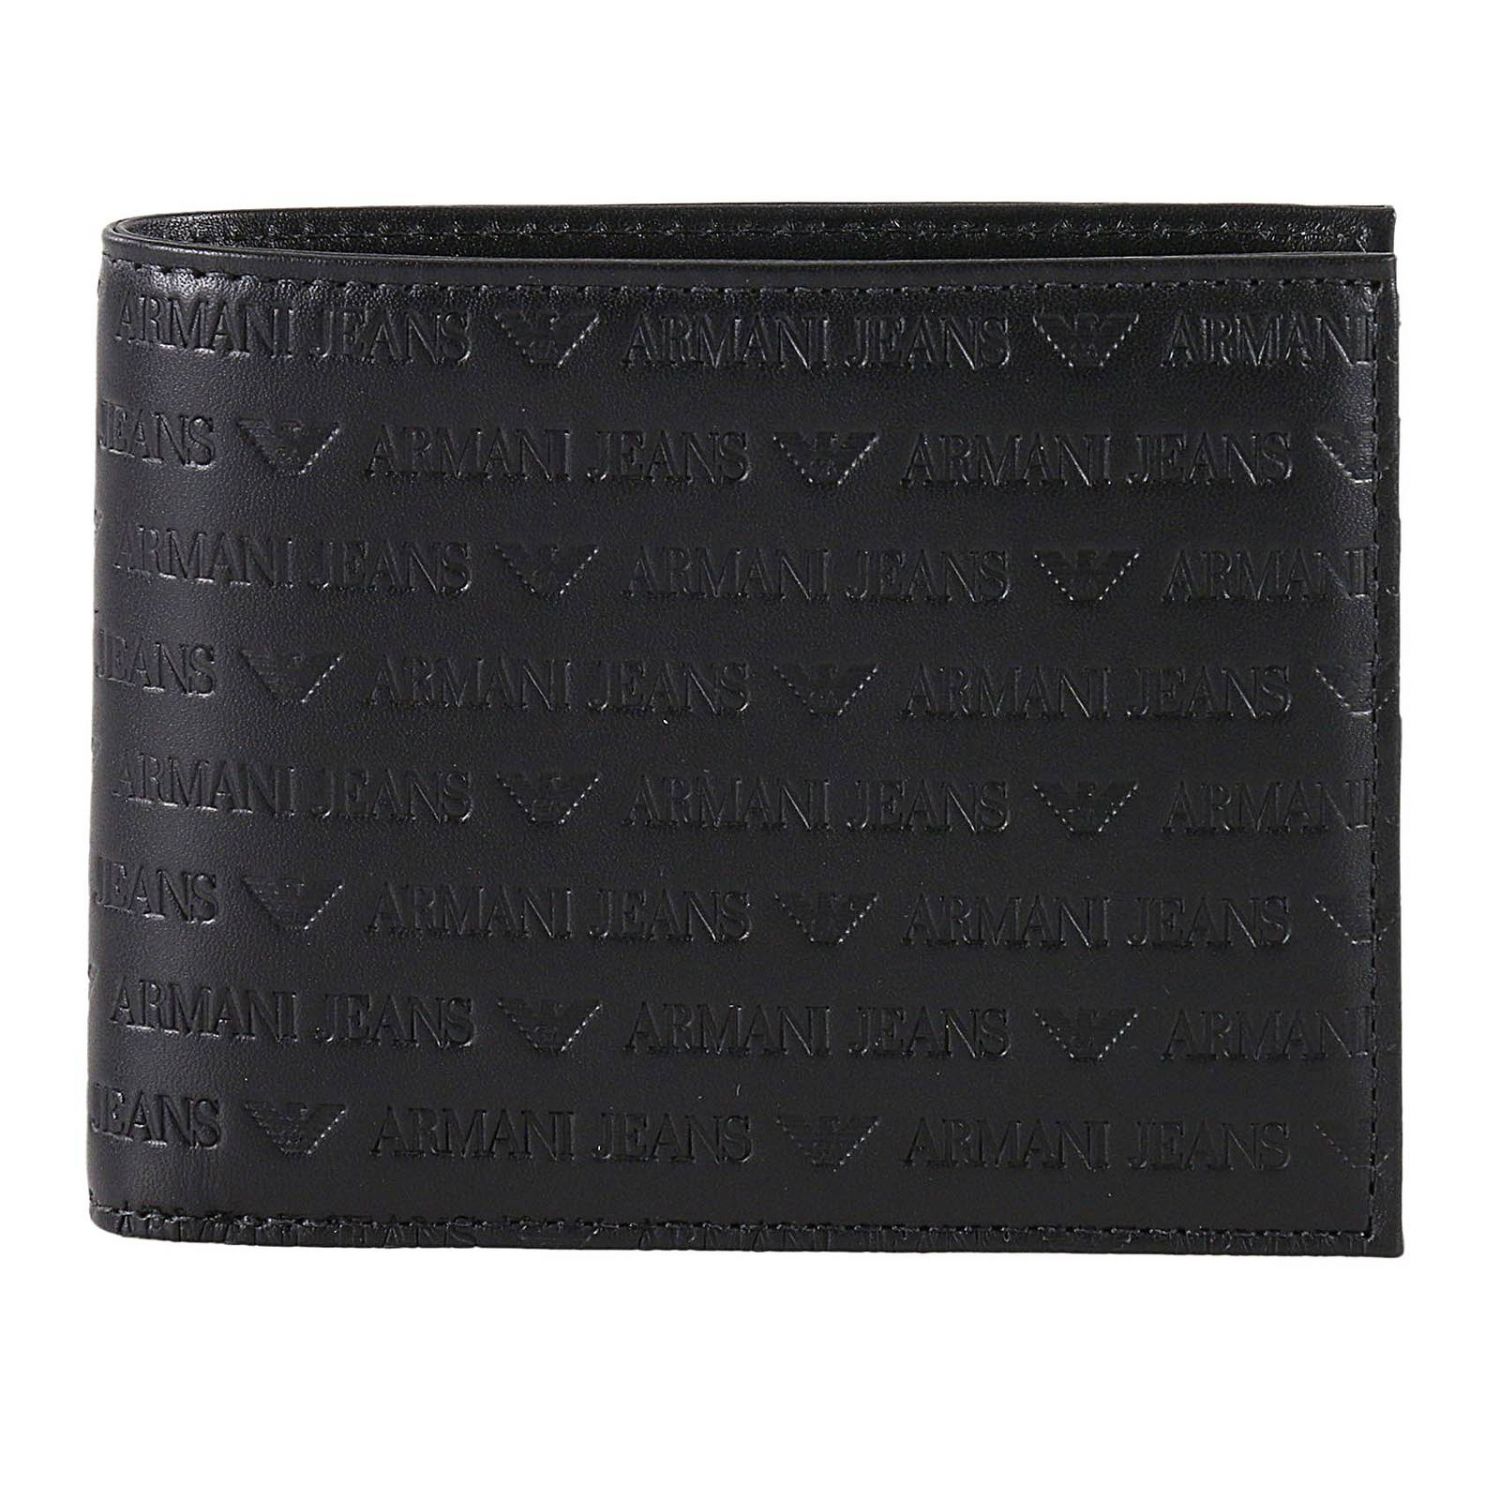 Armani Jeans Outlet: Wallet men - Black | Wallet Armani Jeans 938538 ...